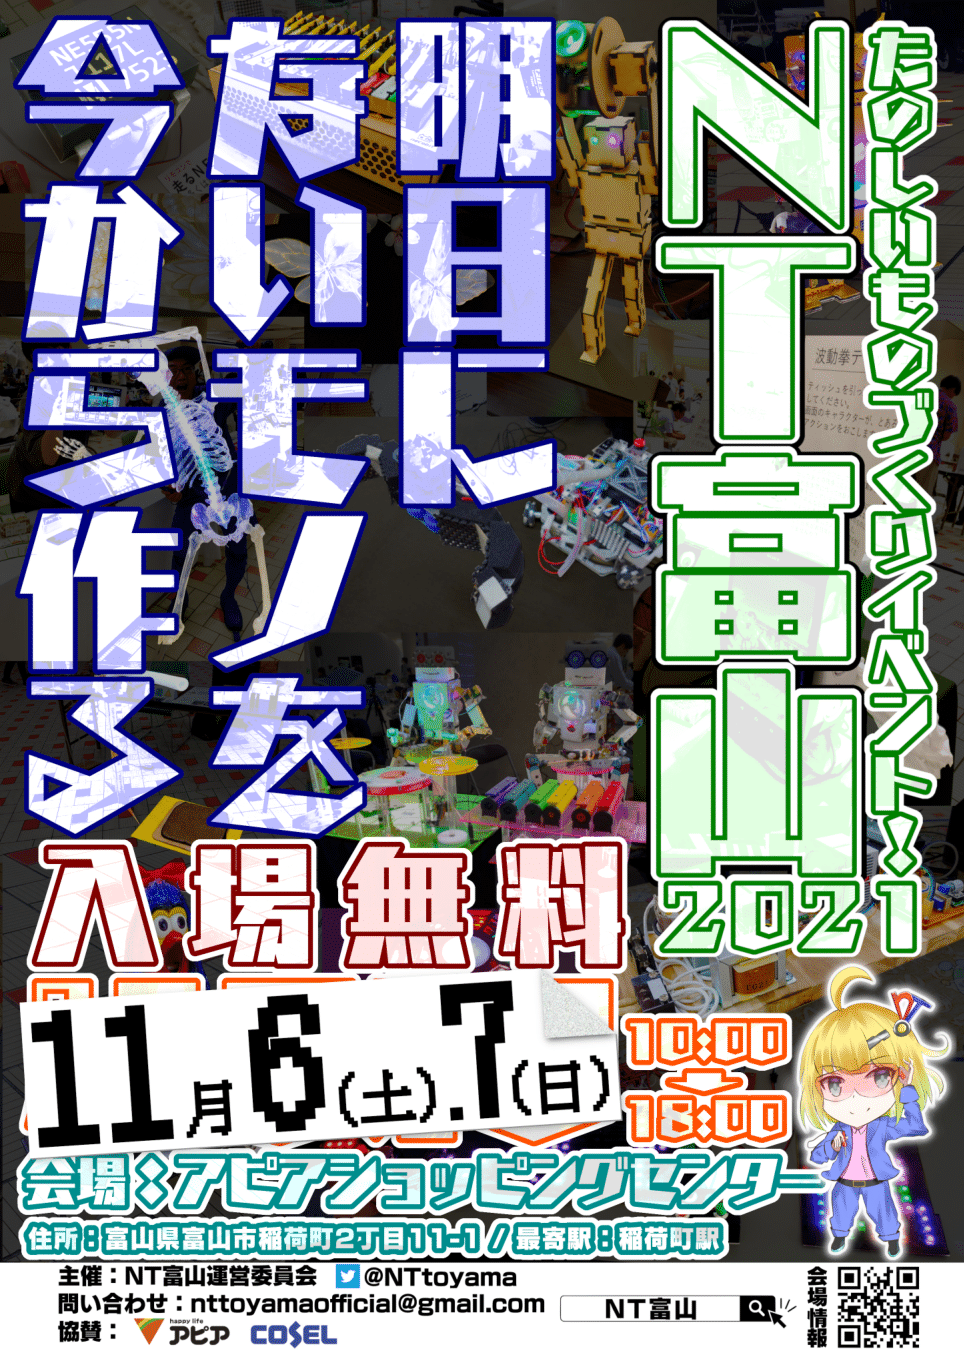 NT_Toyama2021_Poster_2.png